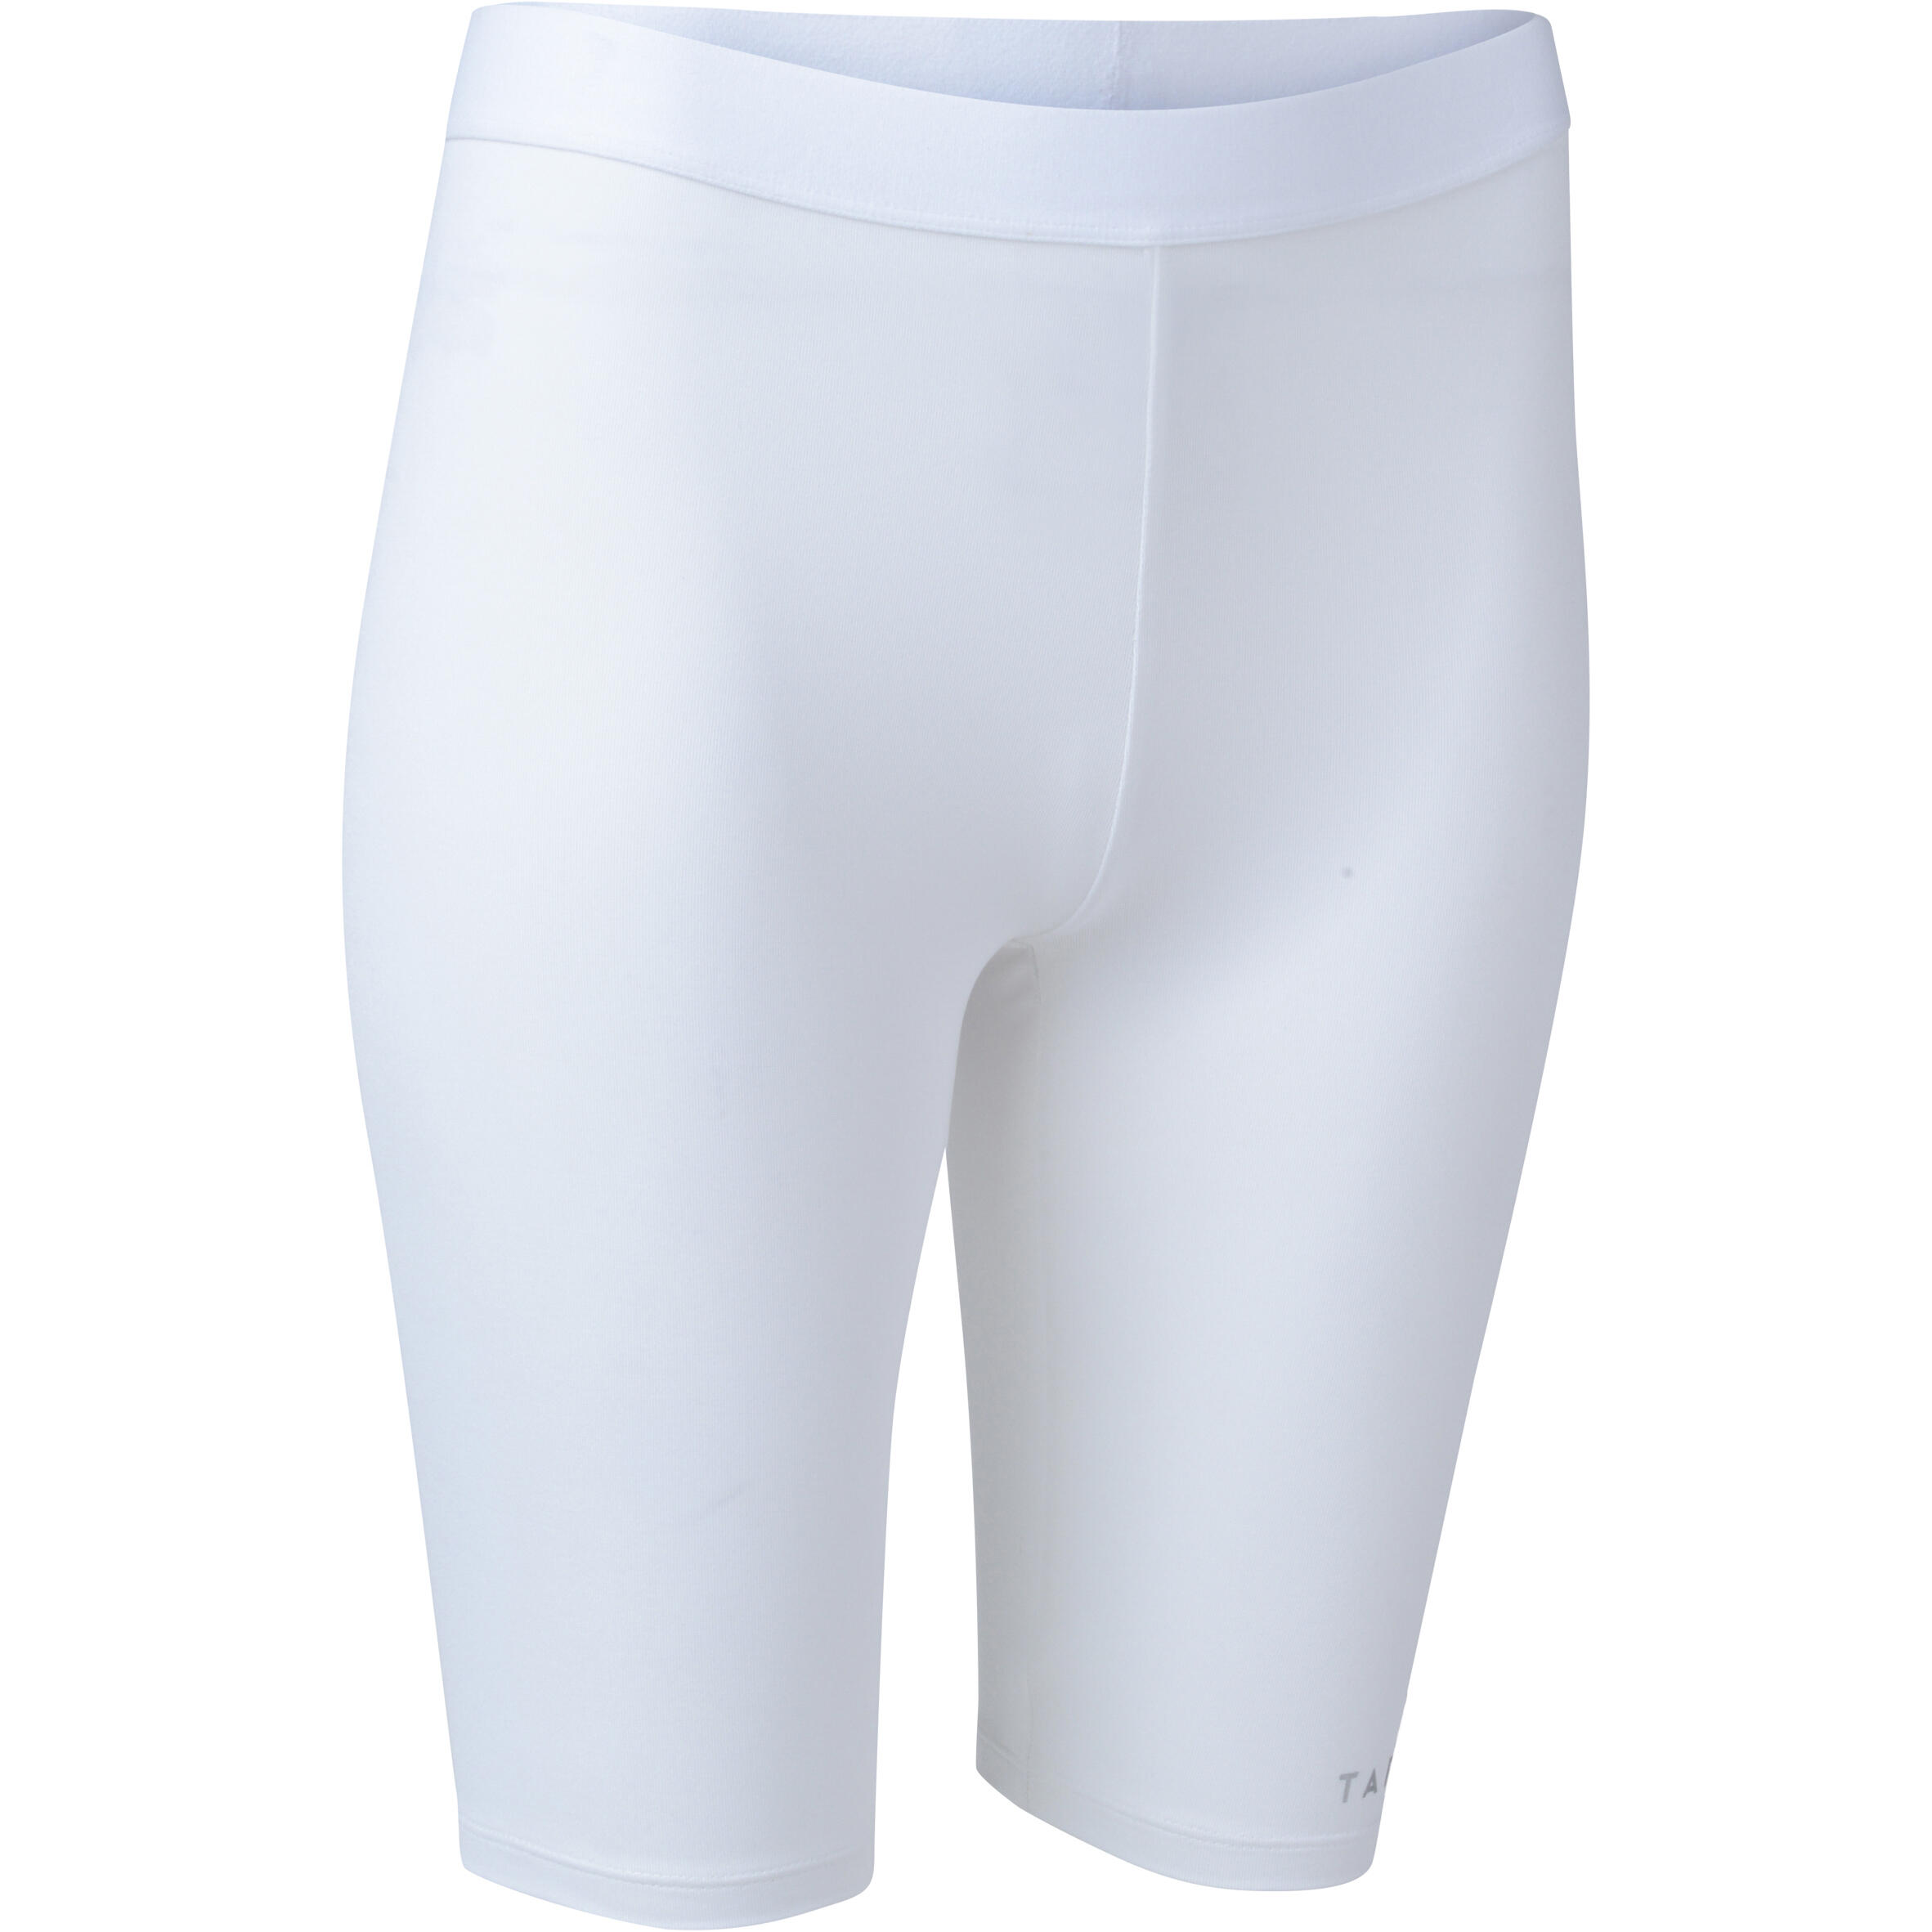 white under shorts